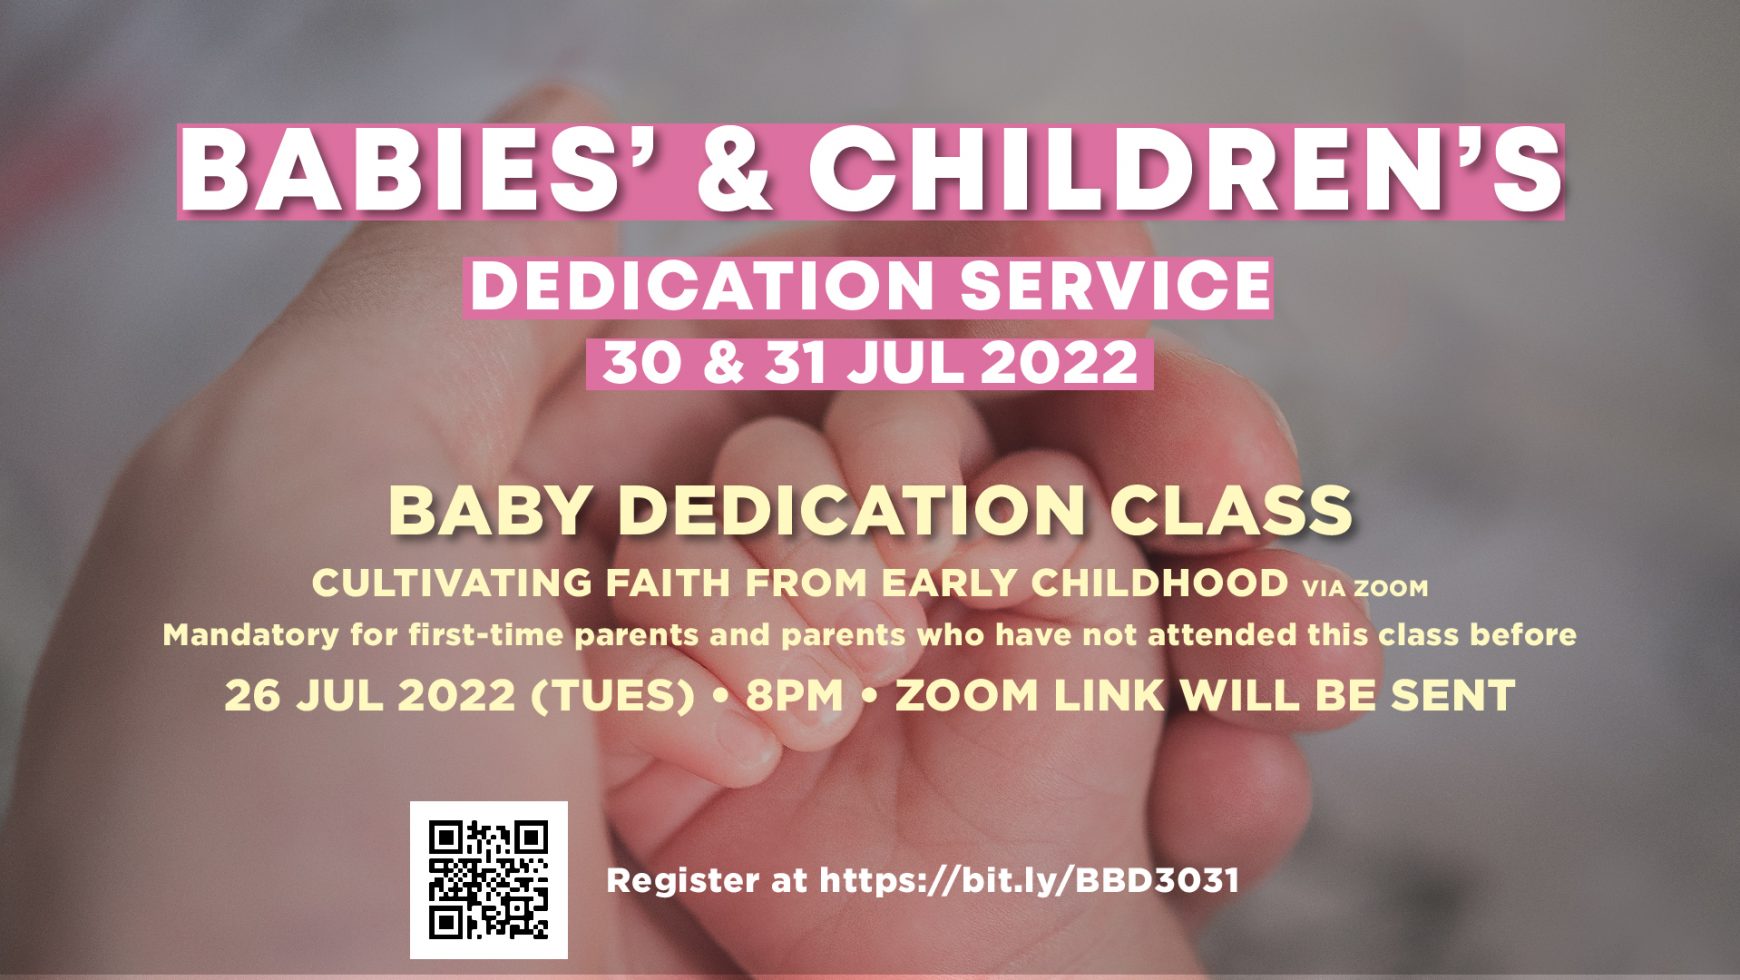 BABIES & CHILDREN’S DEDICATION SERVICE & BABY DEDICATION CLASS